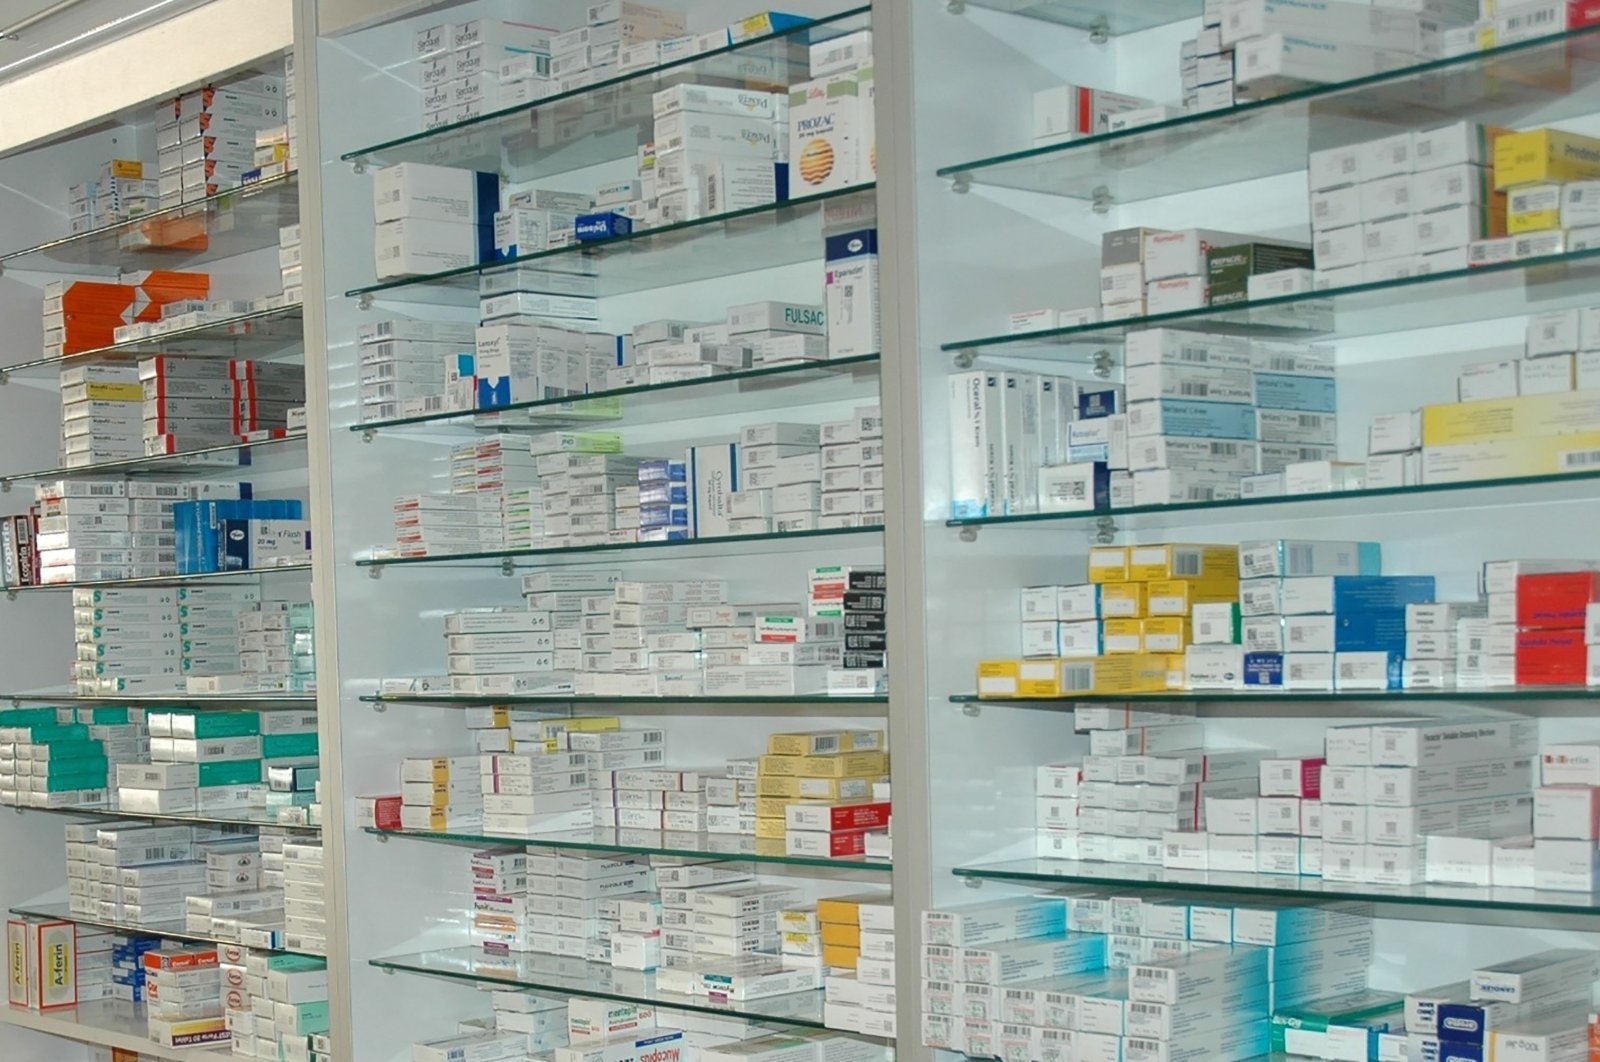 Drugs on the shelves in a pharmacy, Jan. 20, 2020. (Sabah File Photo)